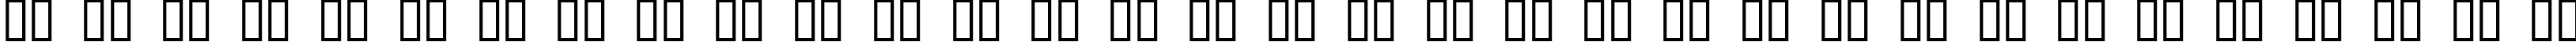 Пример написания русского алфавита шрифтом akoom